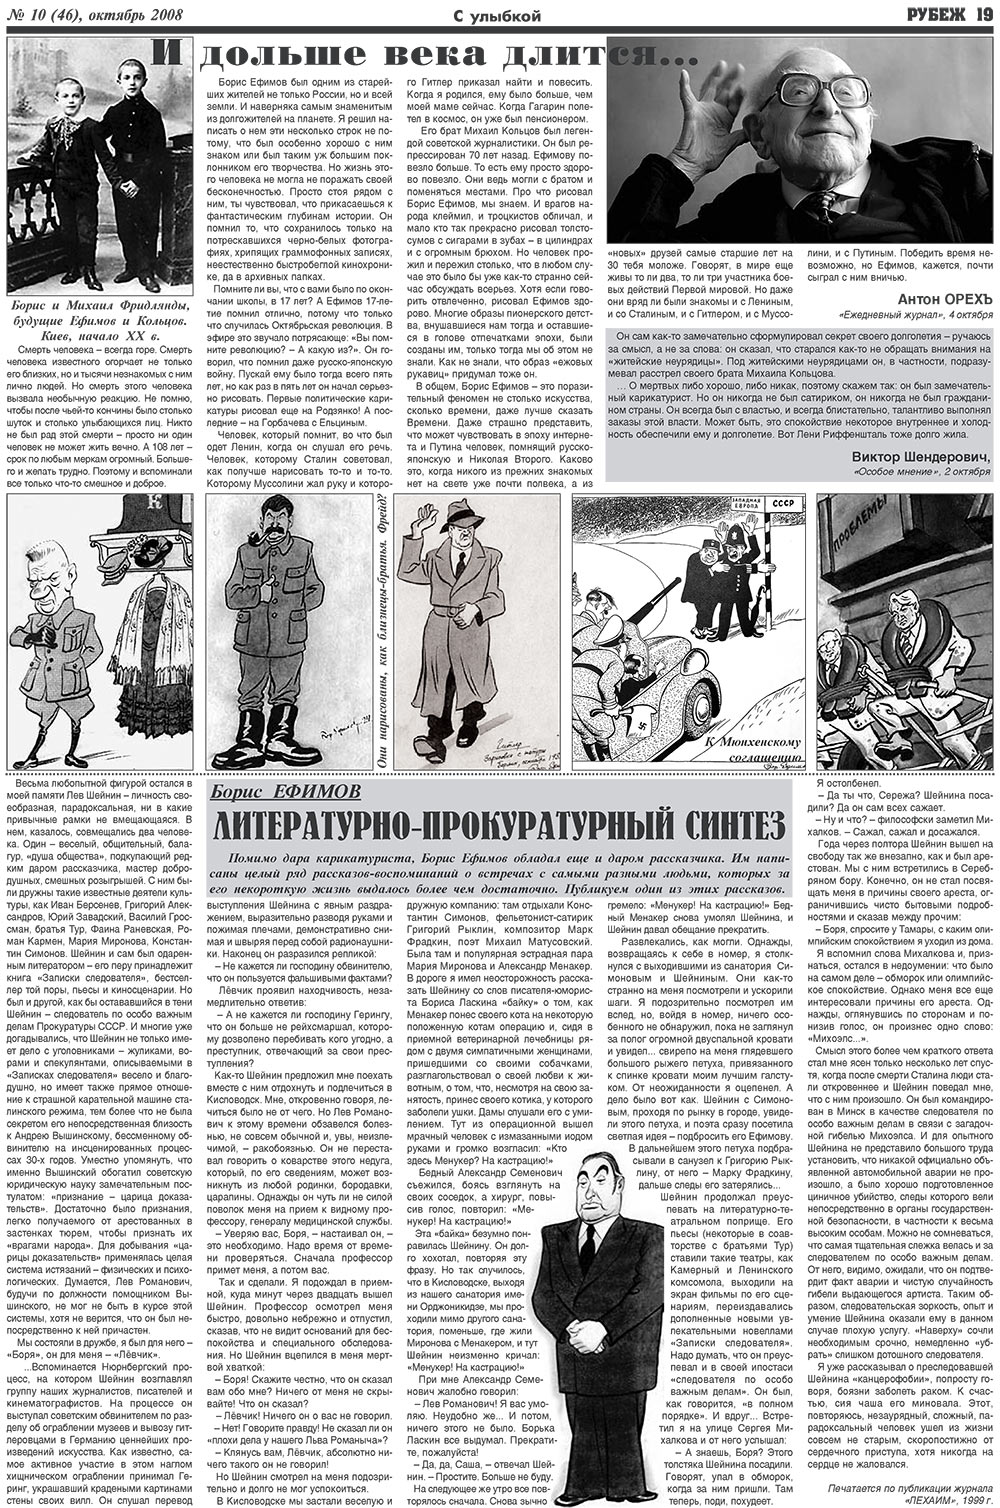 Рубеж, газета. 2008 №10 стр.19